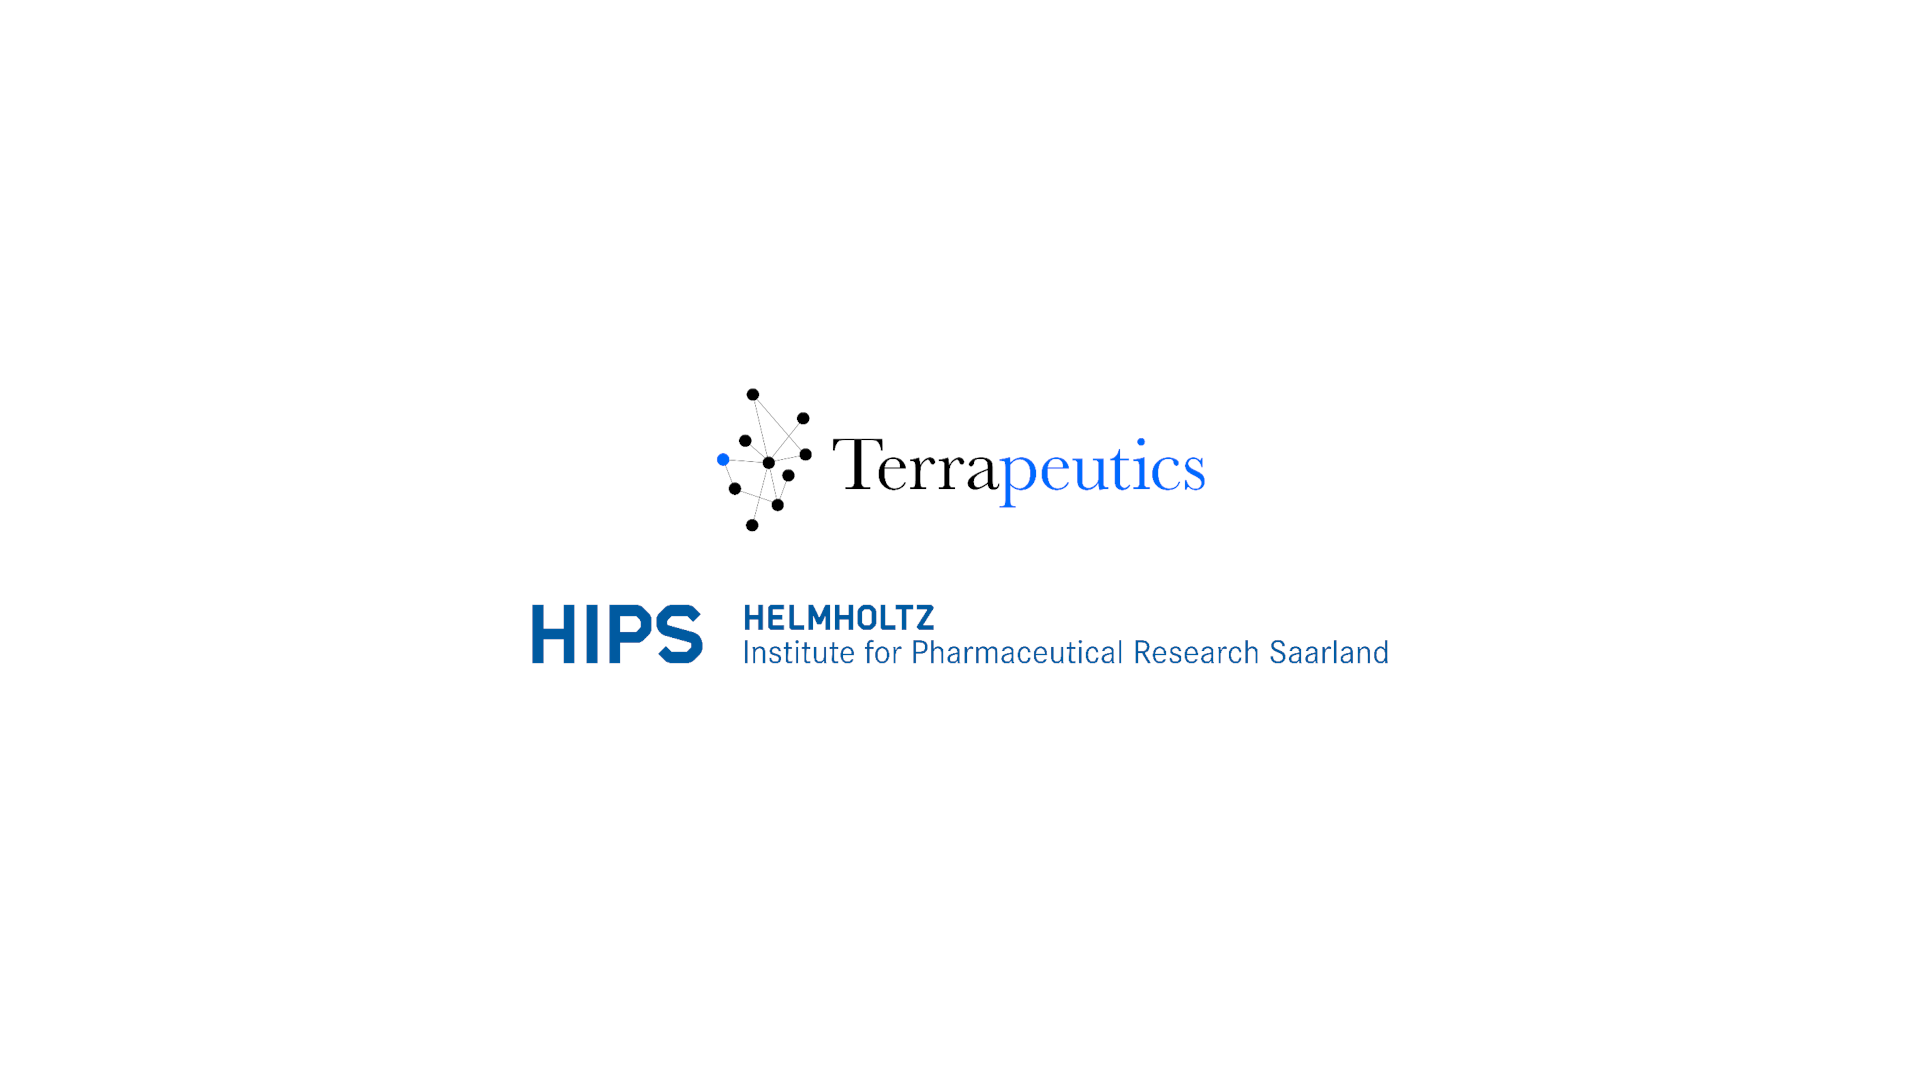 Logos of Terrapeutics and HIPS